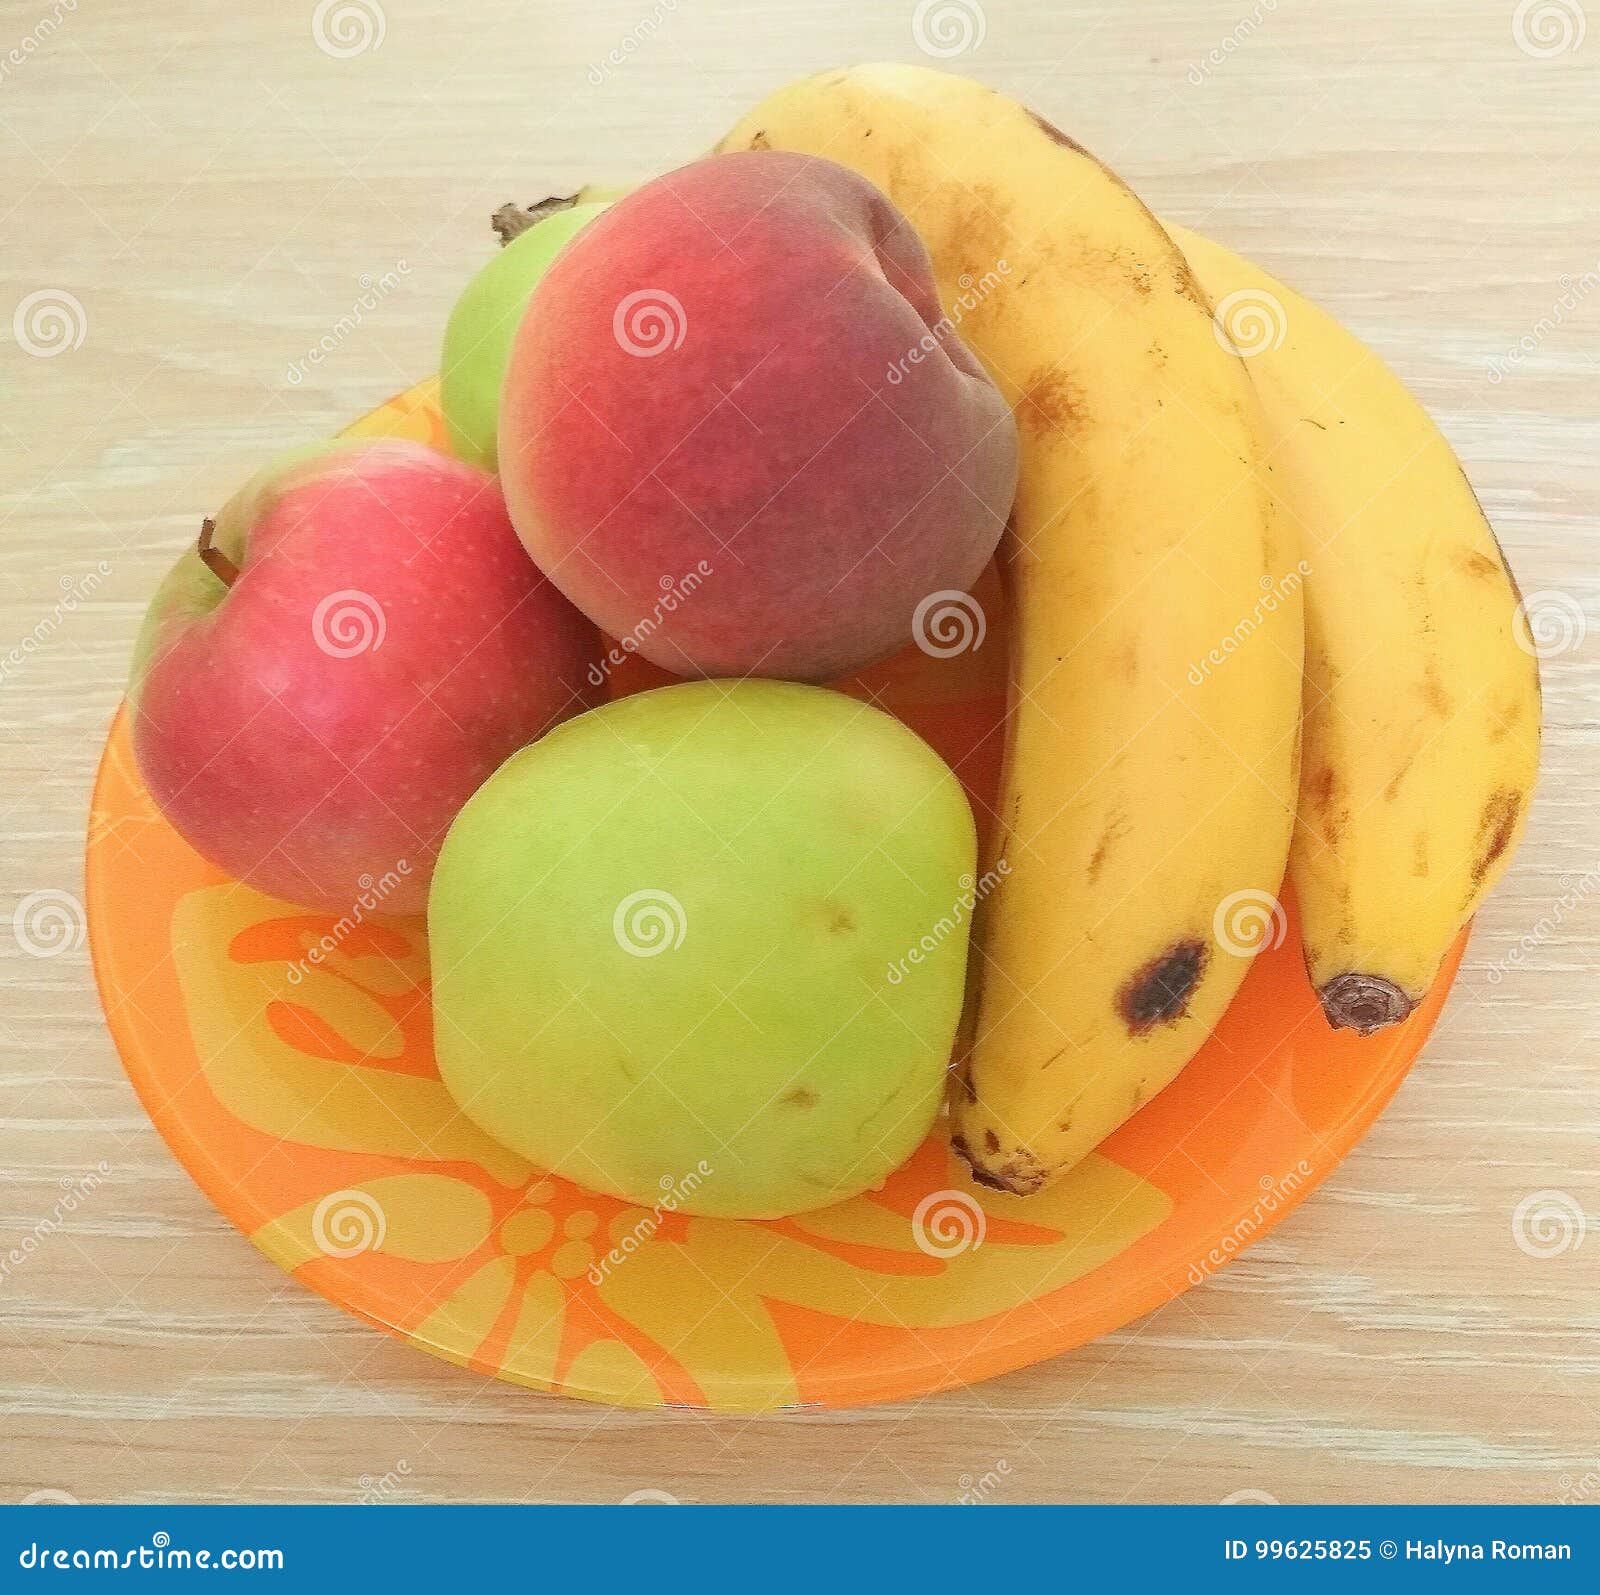 Apple Peach And Banana On Orange Plate Stock Image Image Of Apples